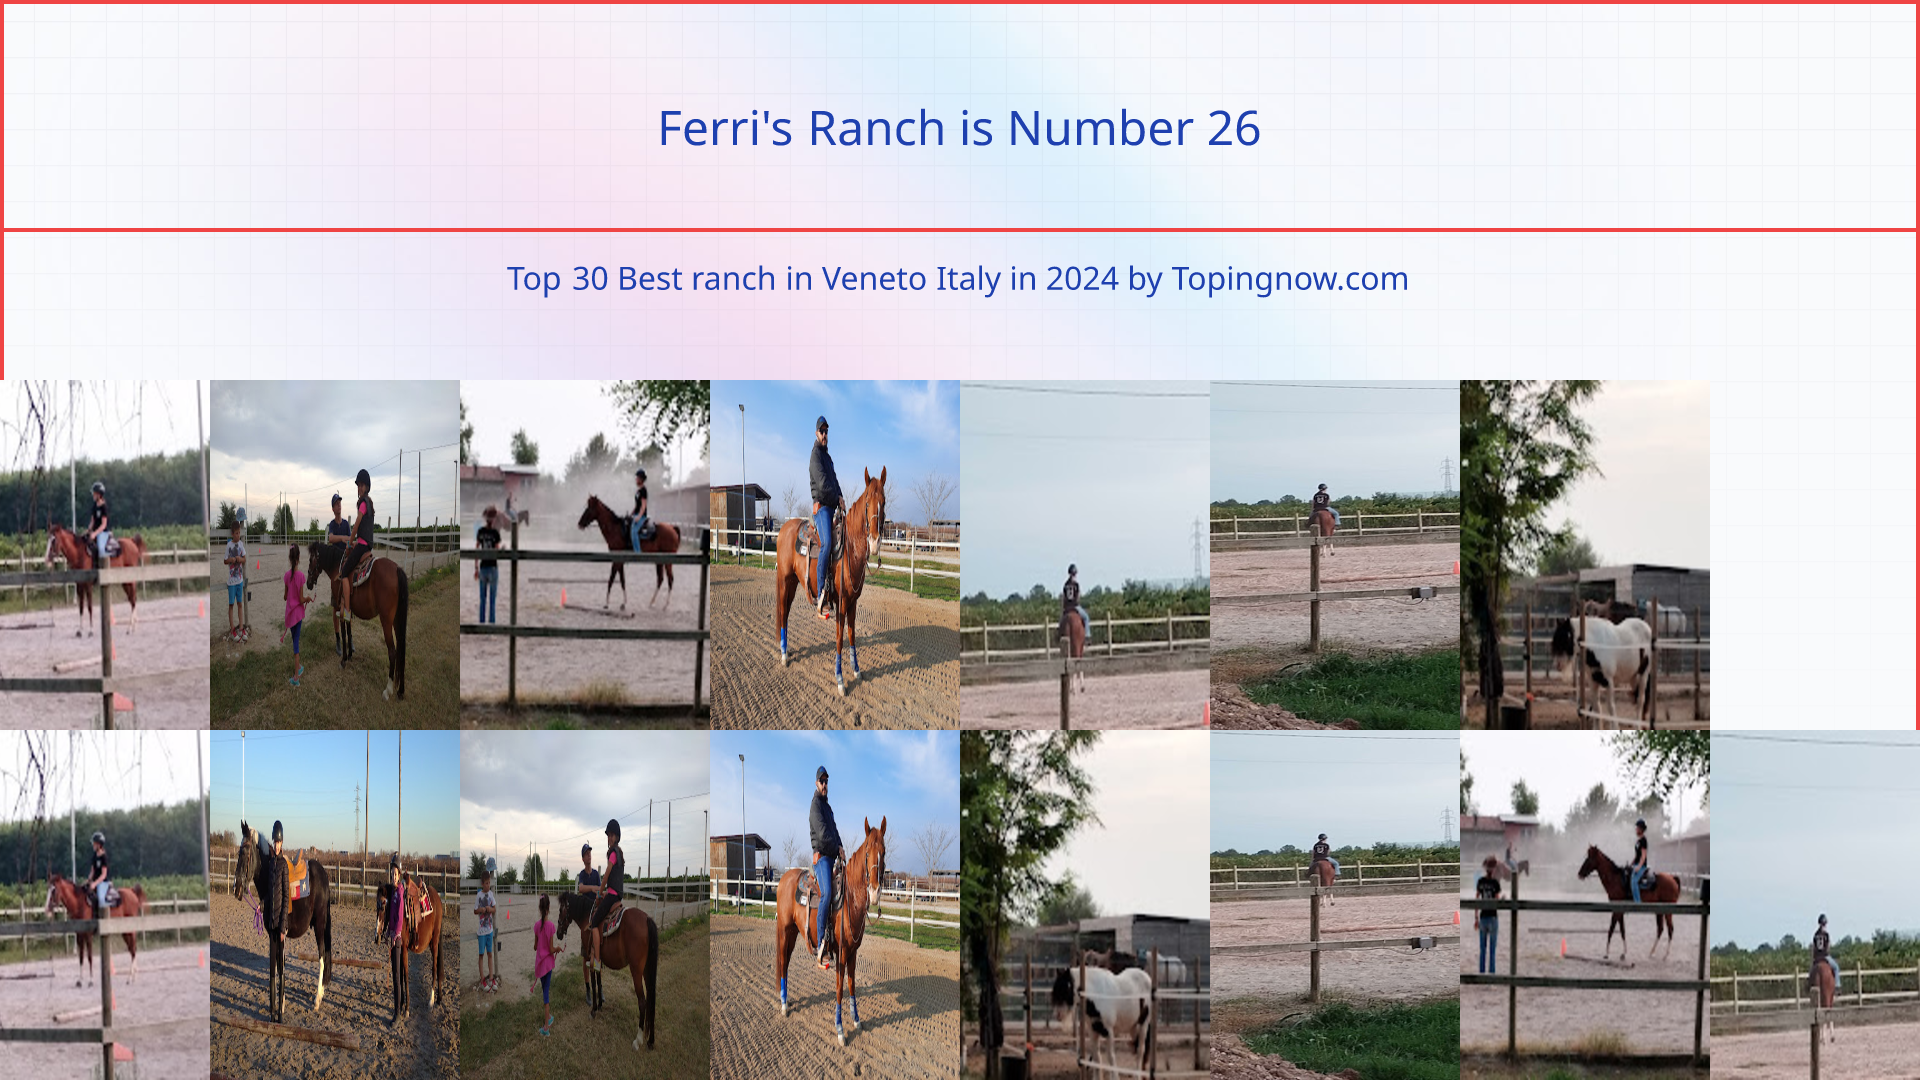 Ferri's Ranch: Top 30 Best ranch in Veneto Italy in 2024